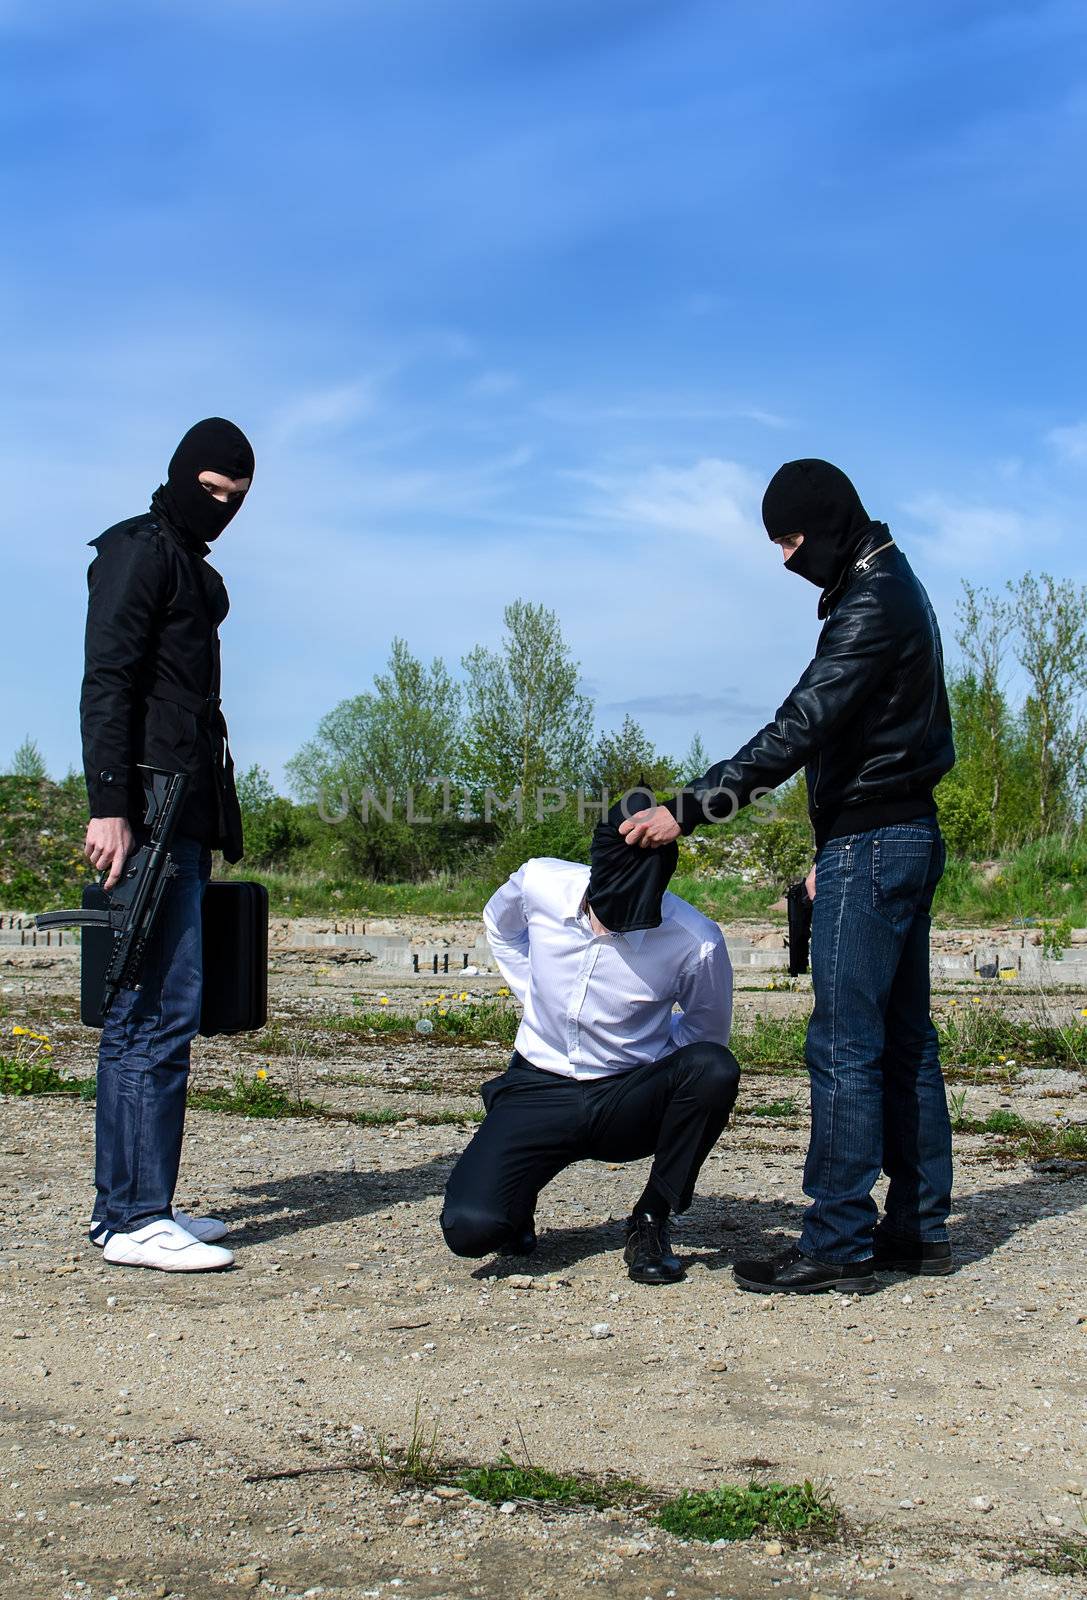 Two masked gunman trying to kill businessman by dmitrimaruta